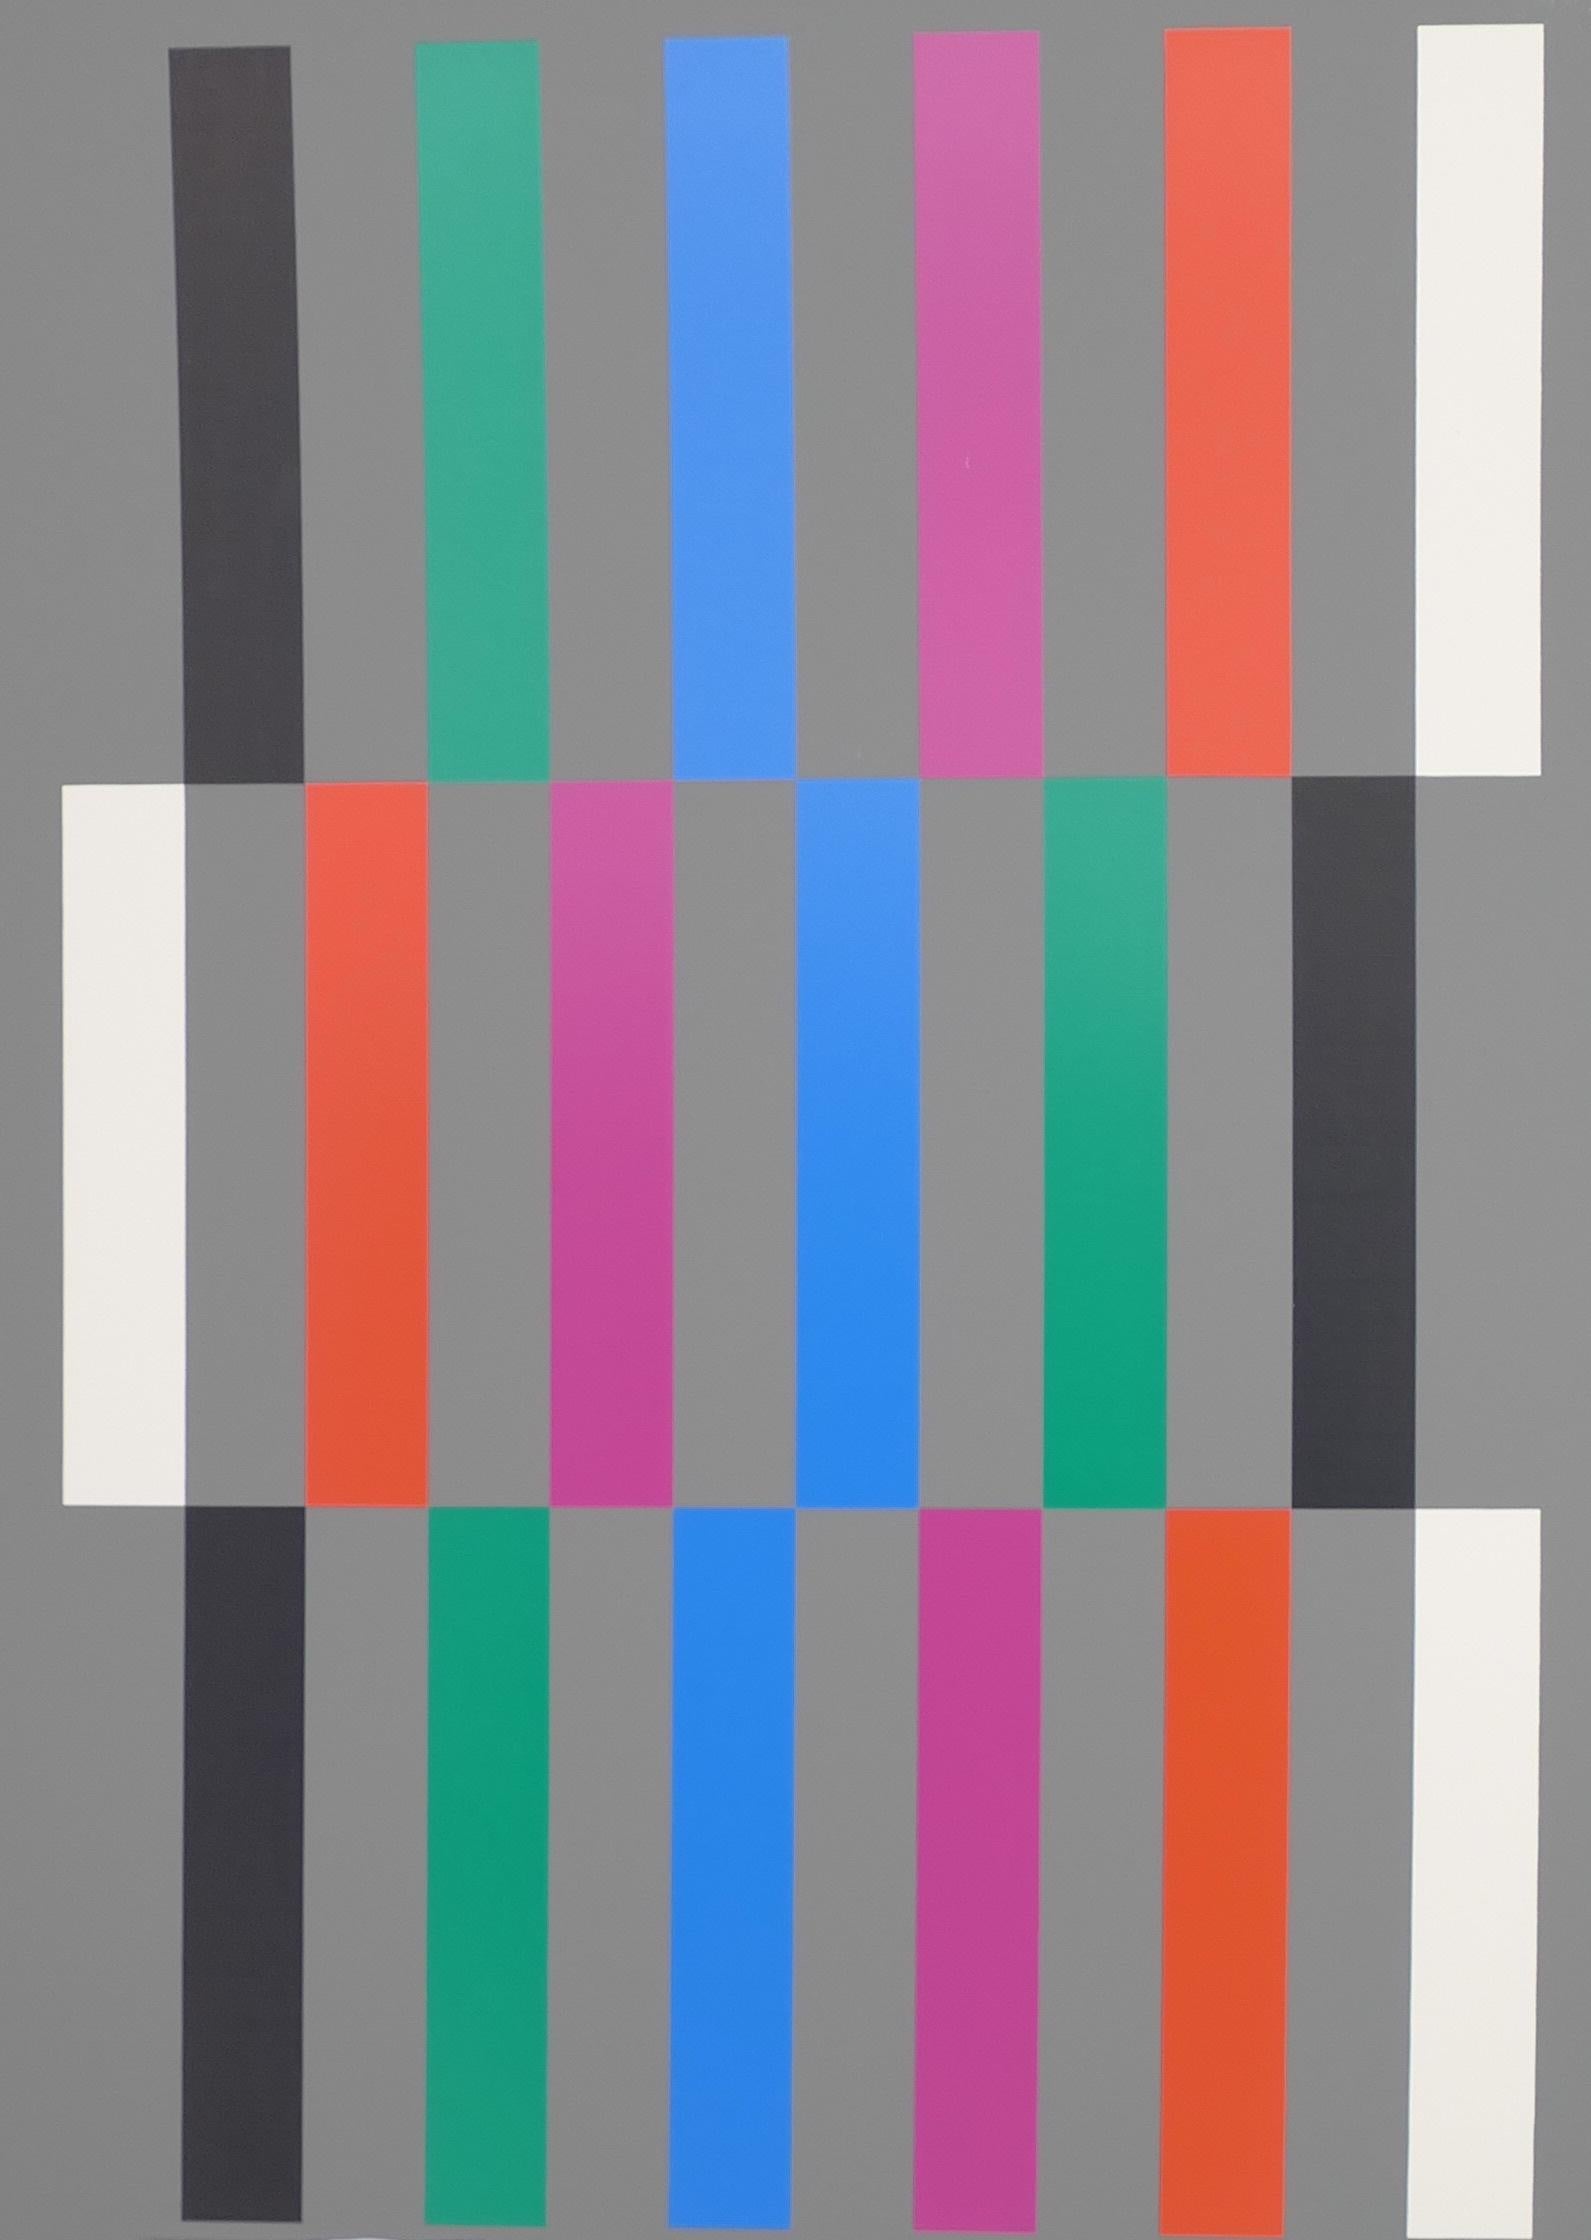 Strukturen und Prinzipien - Offset and Screen Print - 1979 - Gray Abstract Print by Almir da Silva Mavignier